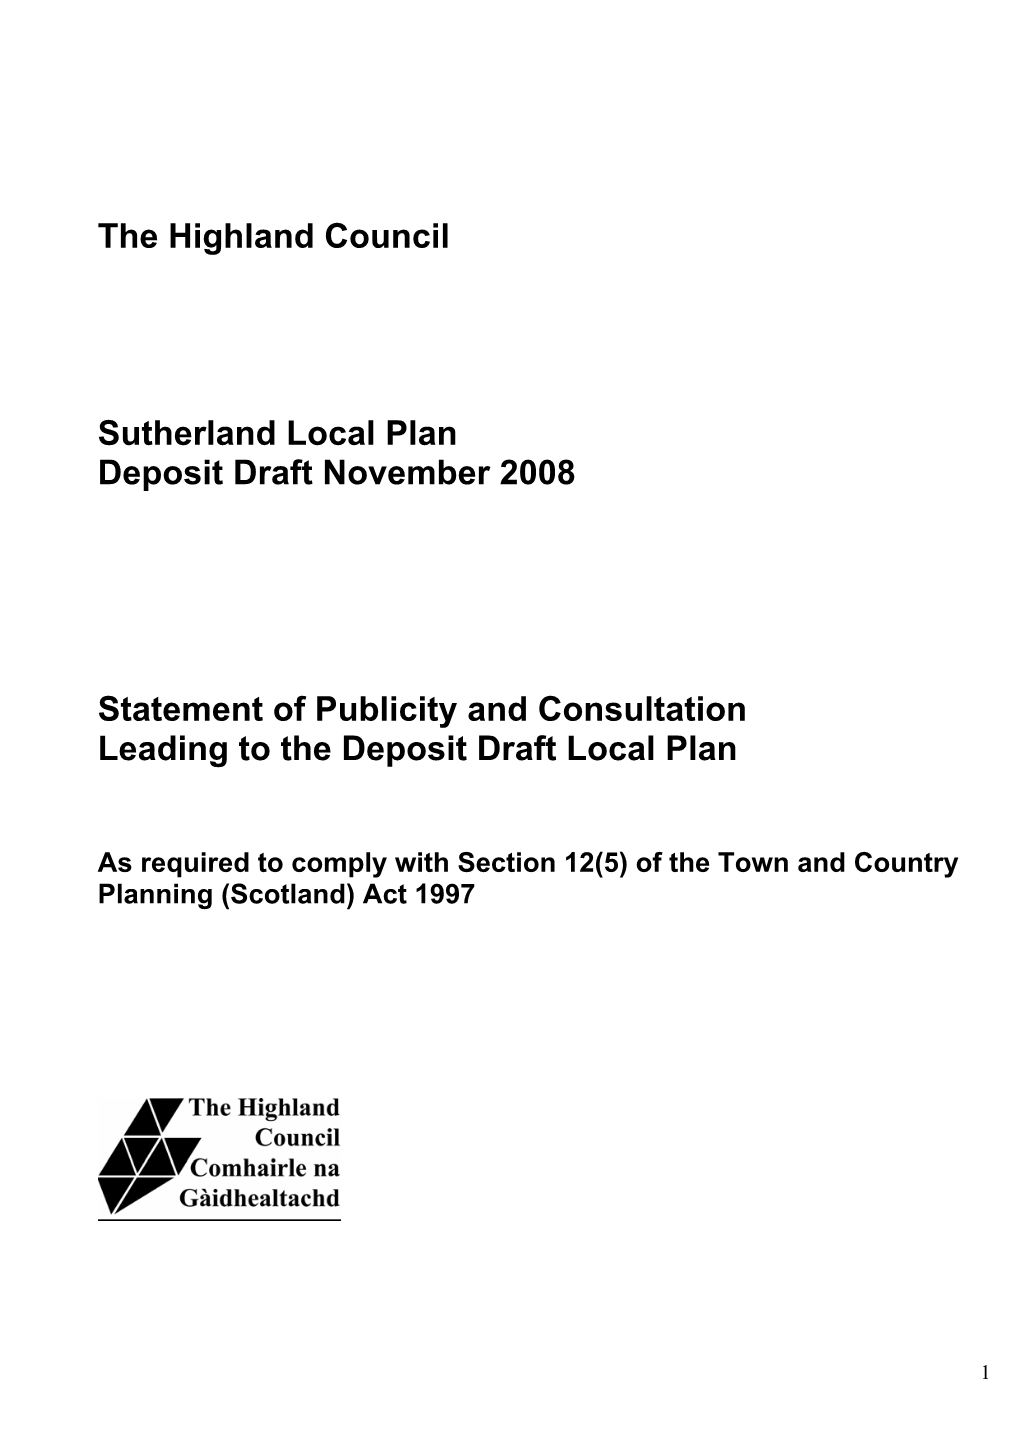 The Highland Council Sutherland Local Plan Deposit Draft November